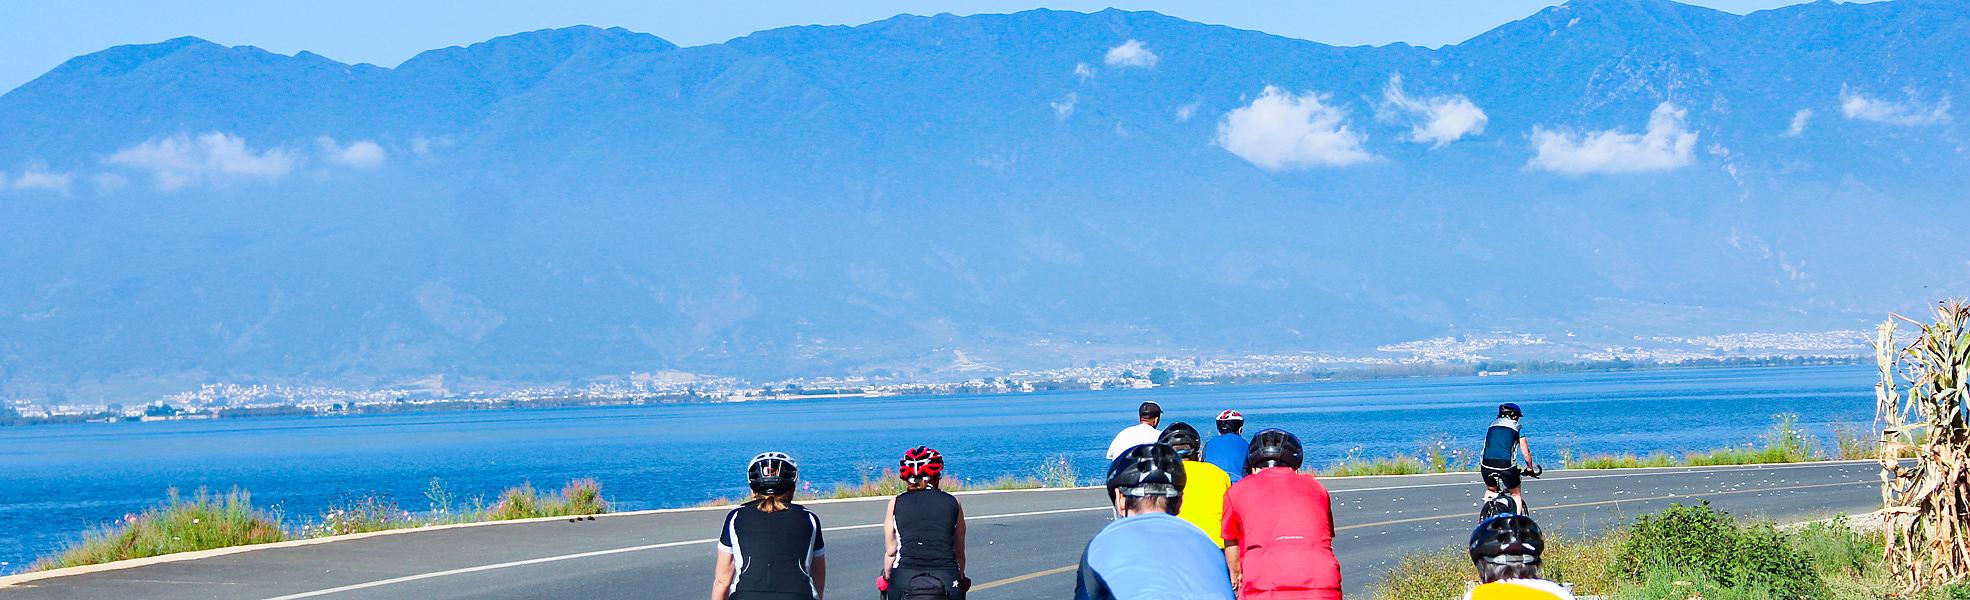 Cycling along the Erhai Lake